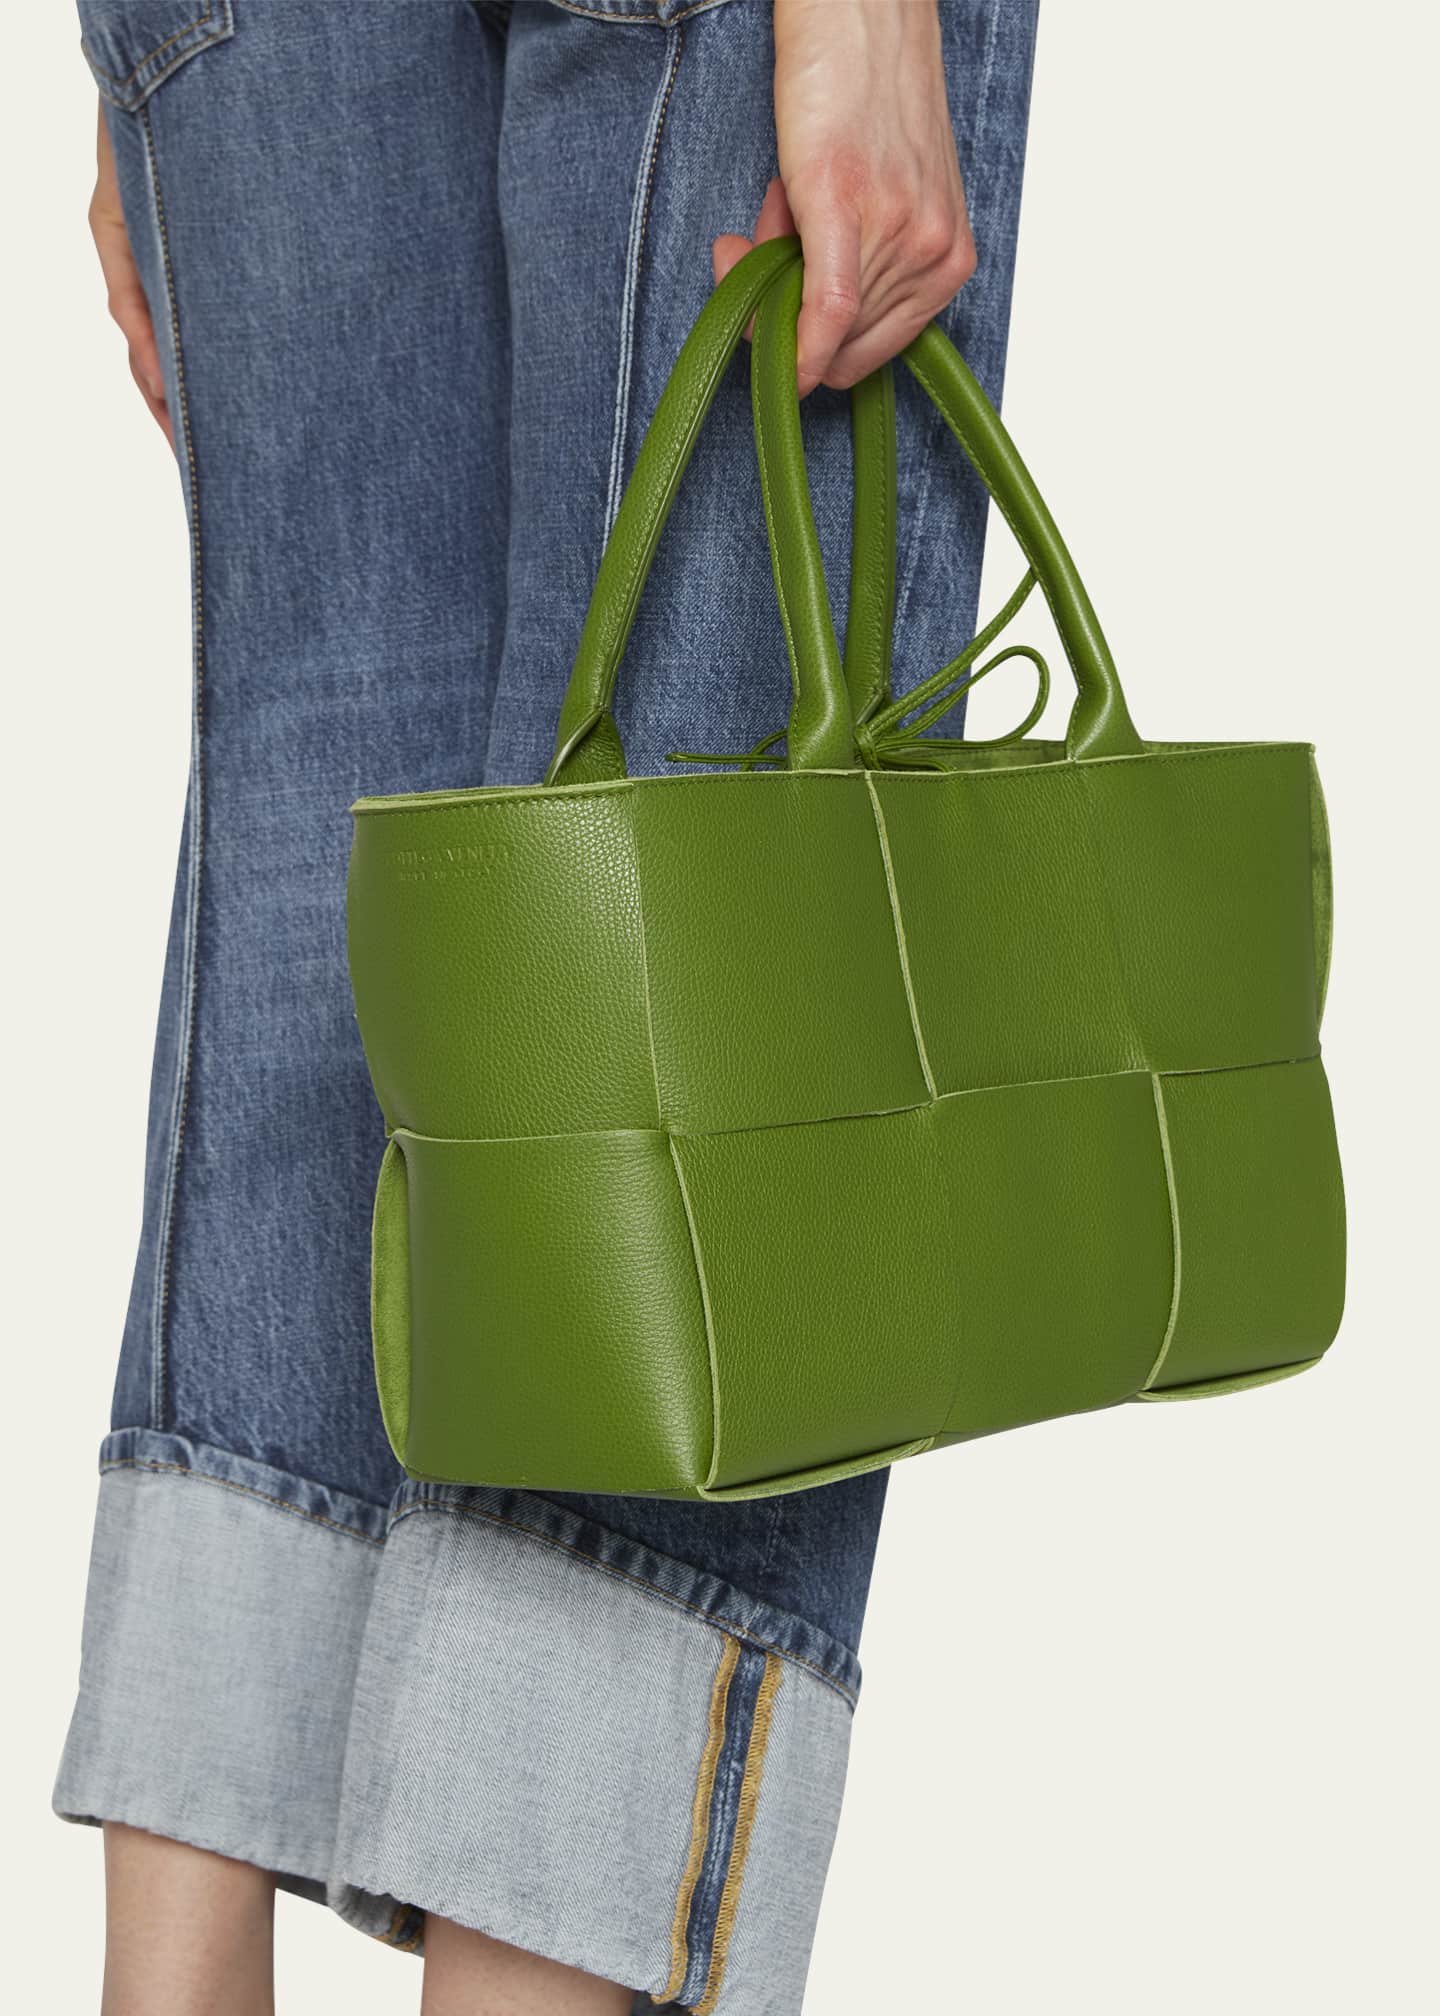 Bottega Veneta® Arco Hobo Bag in Dark Green. Shop online now.